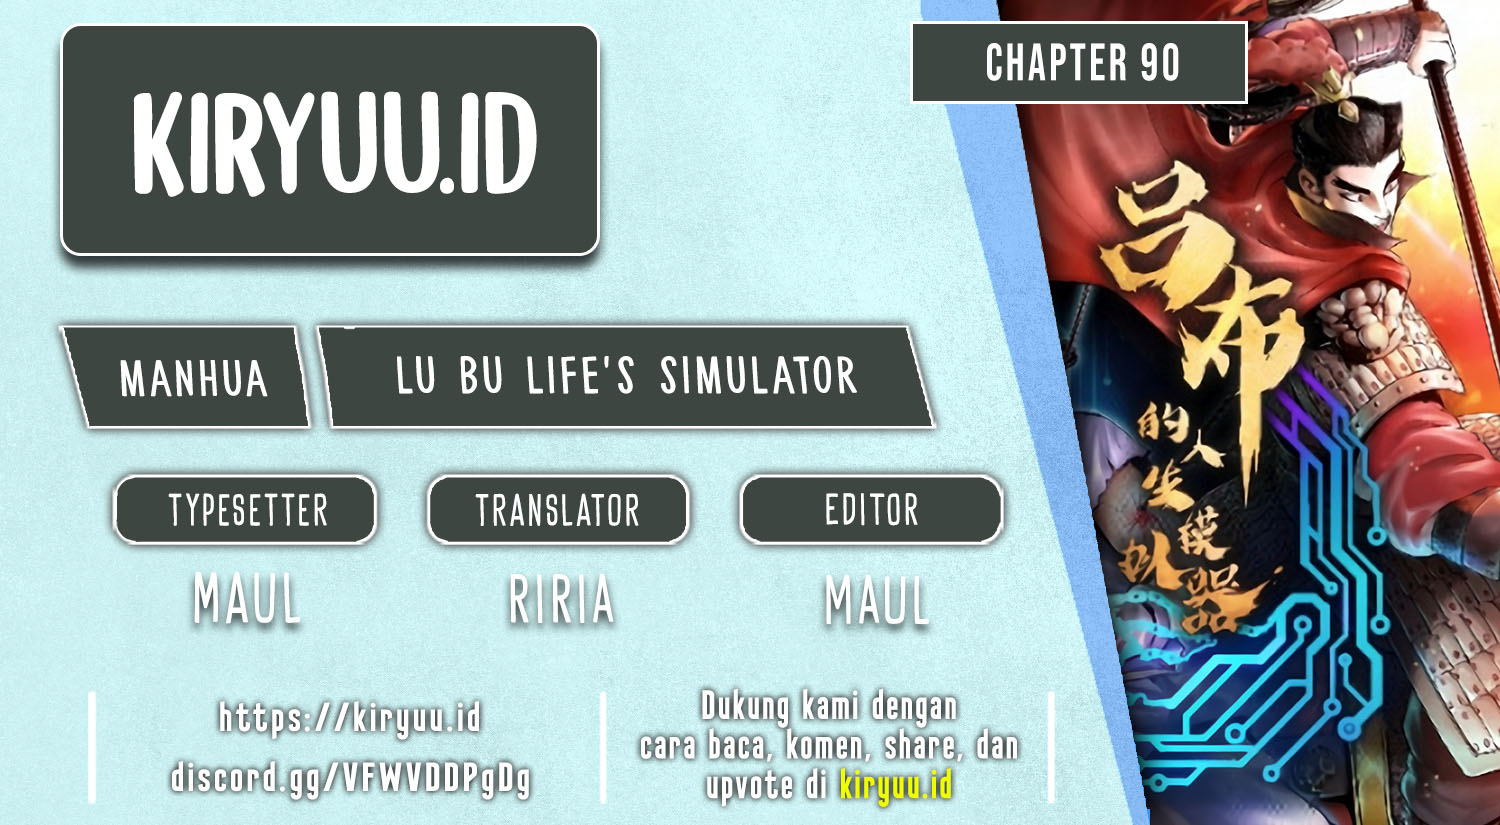 Lu Bu’s Life Simulator Chapter 90